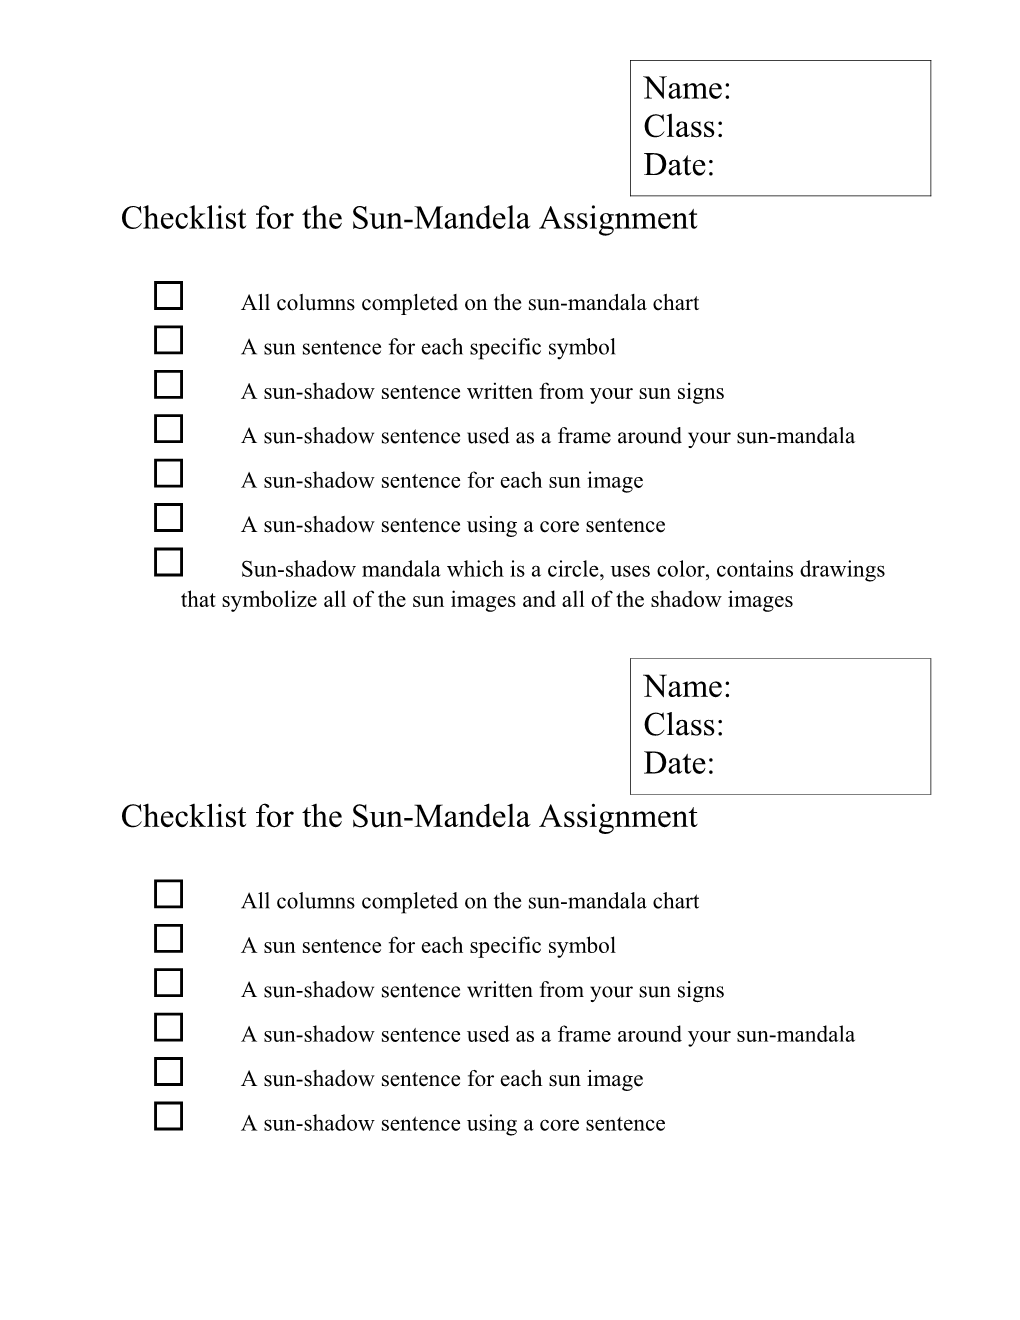 Checklist for the Sun-Mandela Assignment